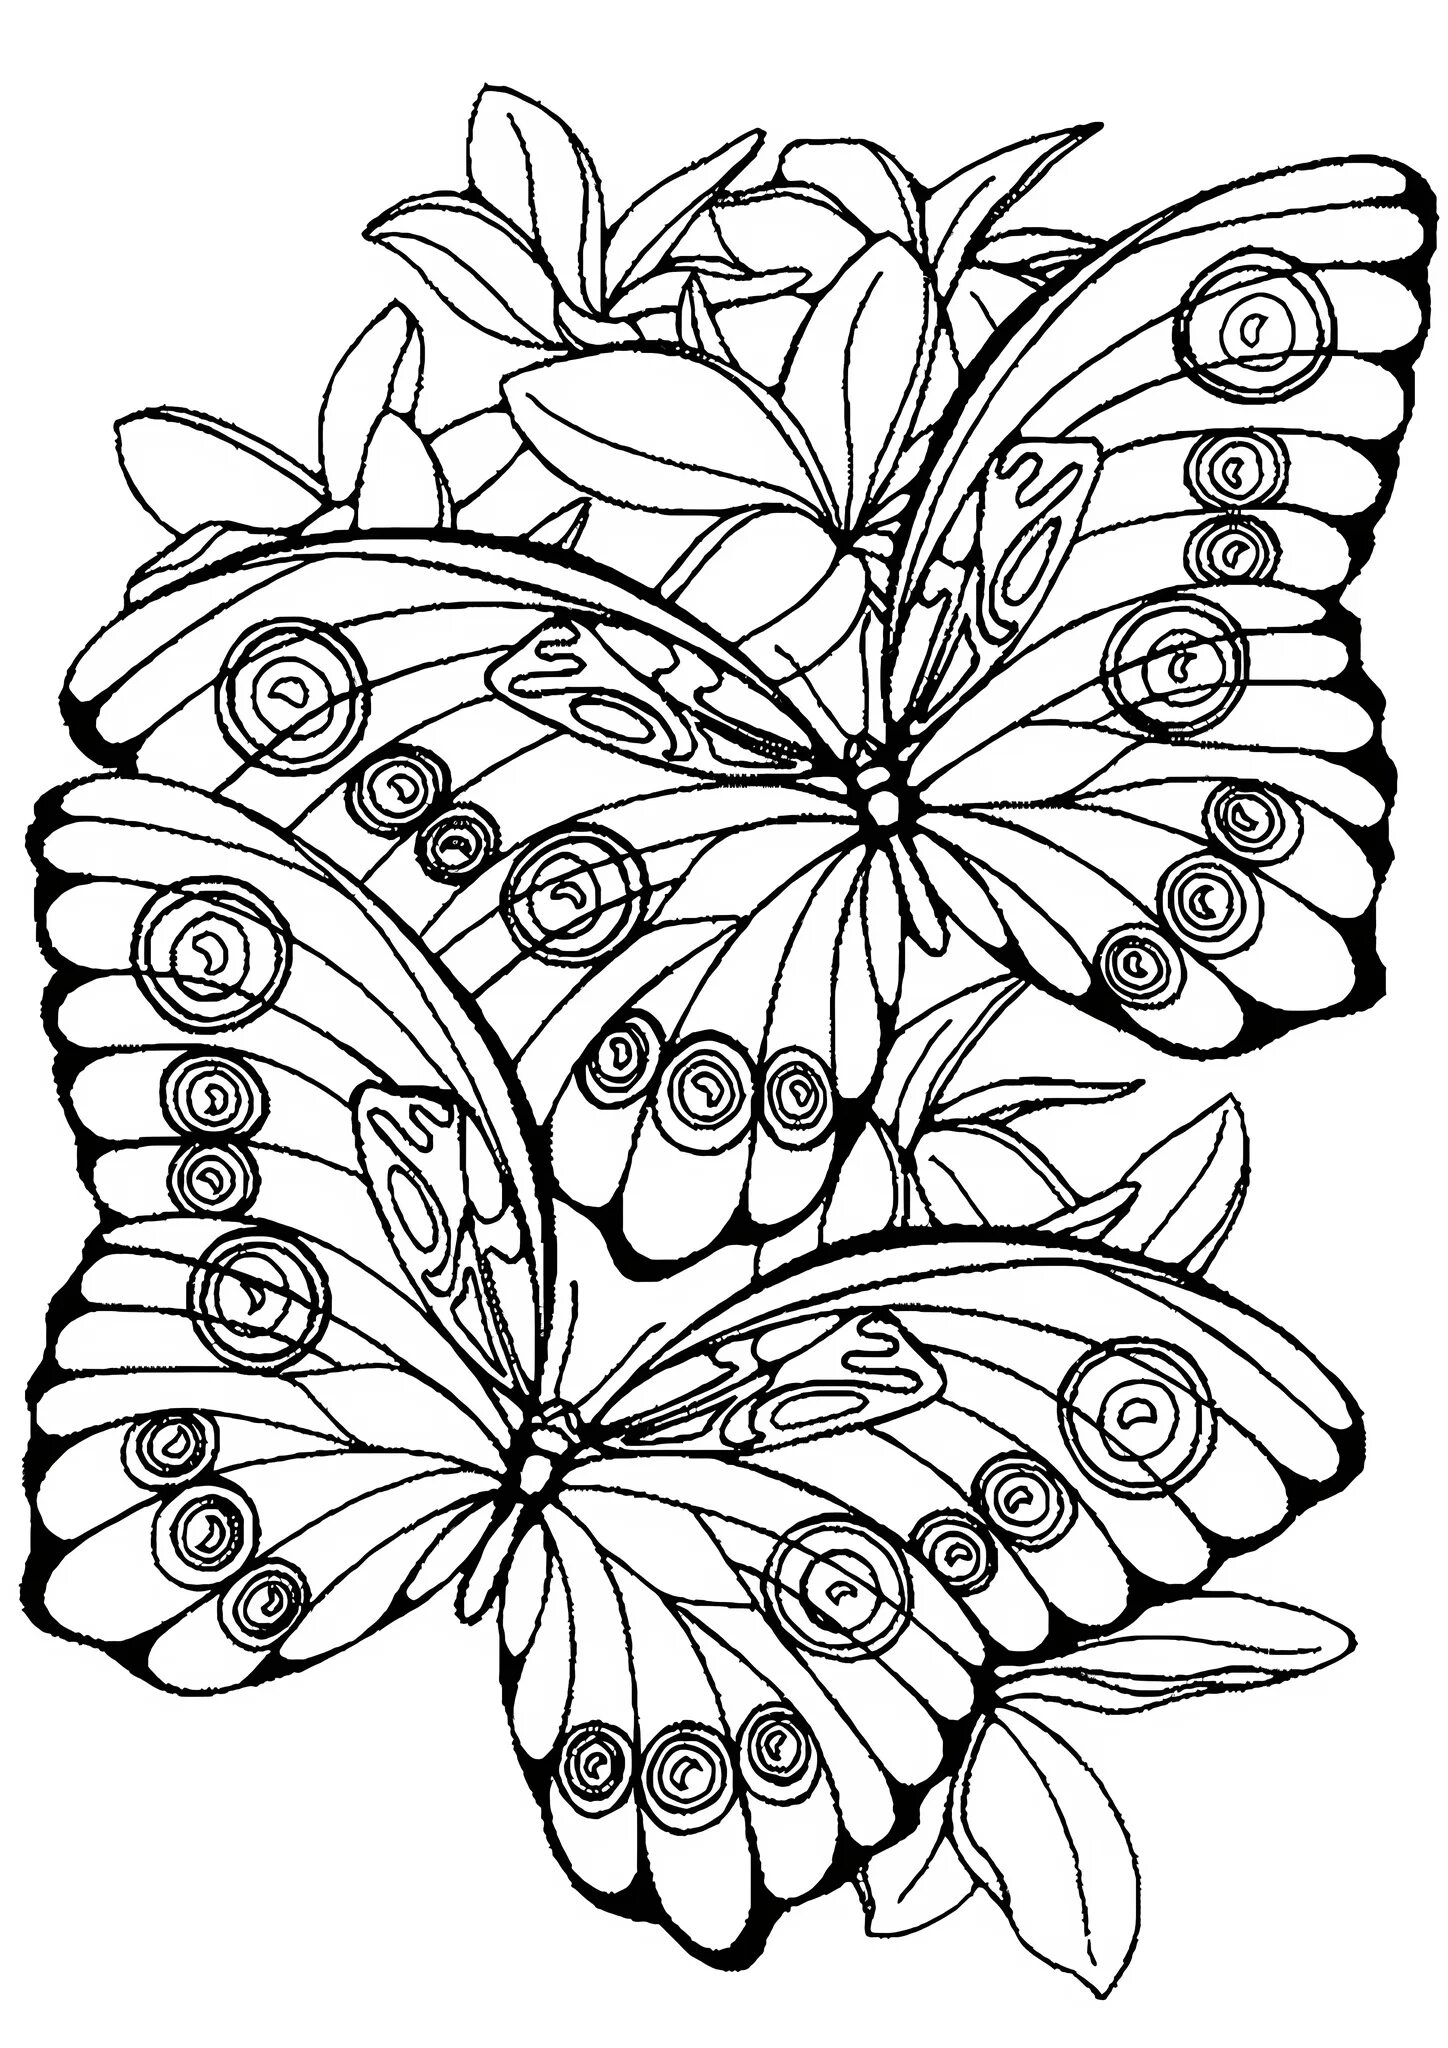 Раскраска а4 10 лет. Раскраска "бабочки". Раскраски красивые. Бабочка раскраска для детей. Цветы и бабочки. Раскраска.